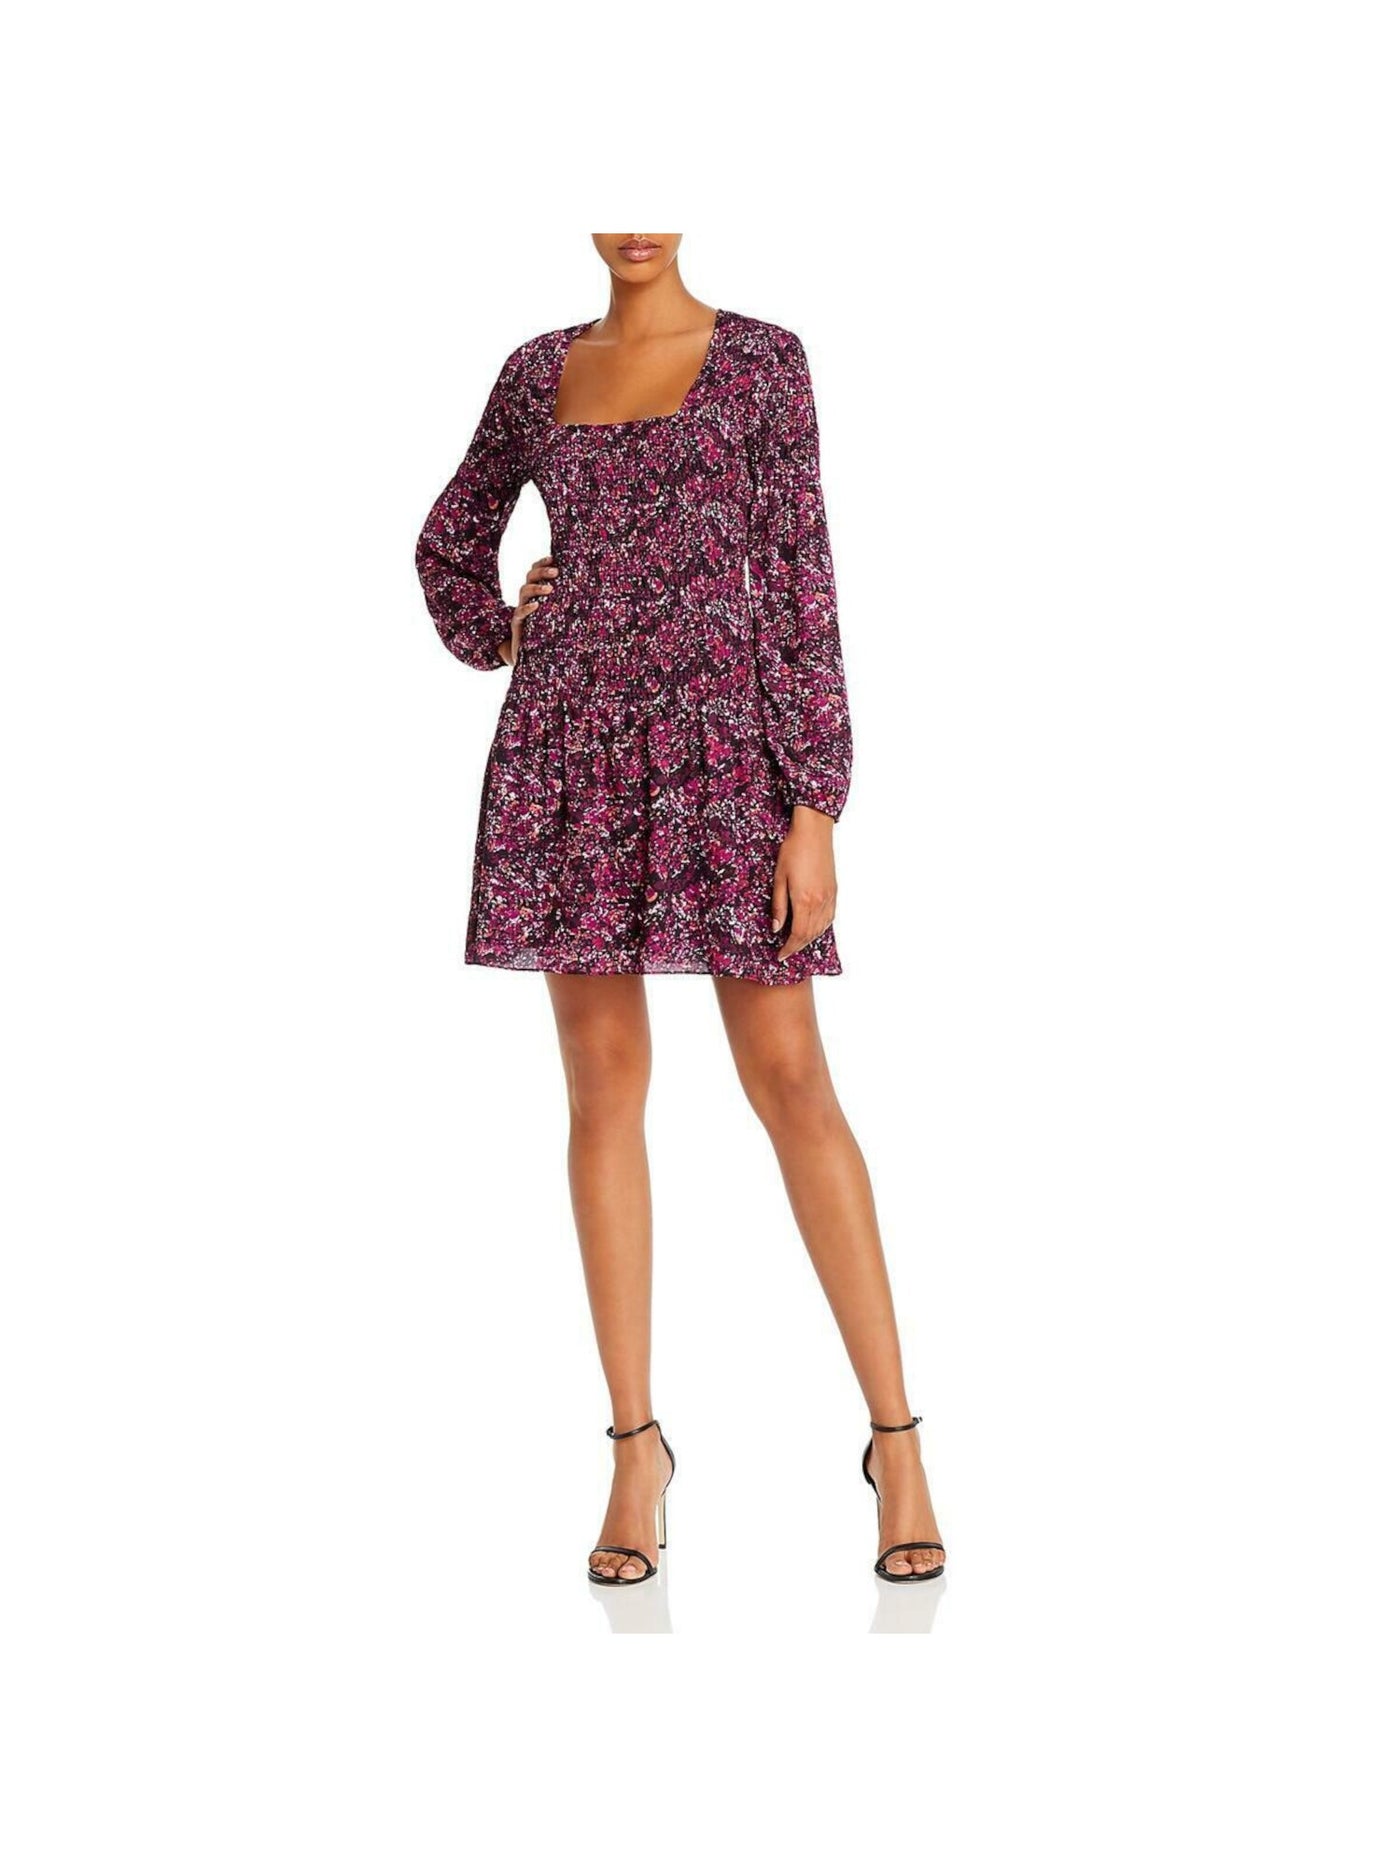 PARKER Womens Purple Floral Long Sleeve Short Fit + Flare Dress Size: S